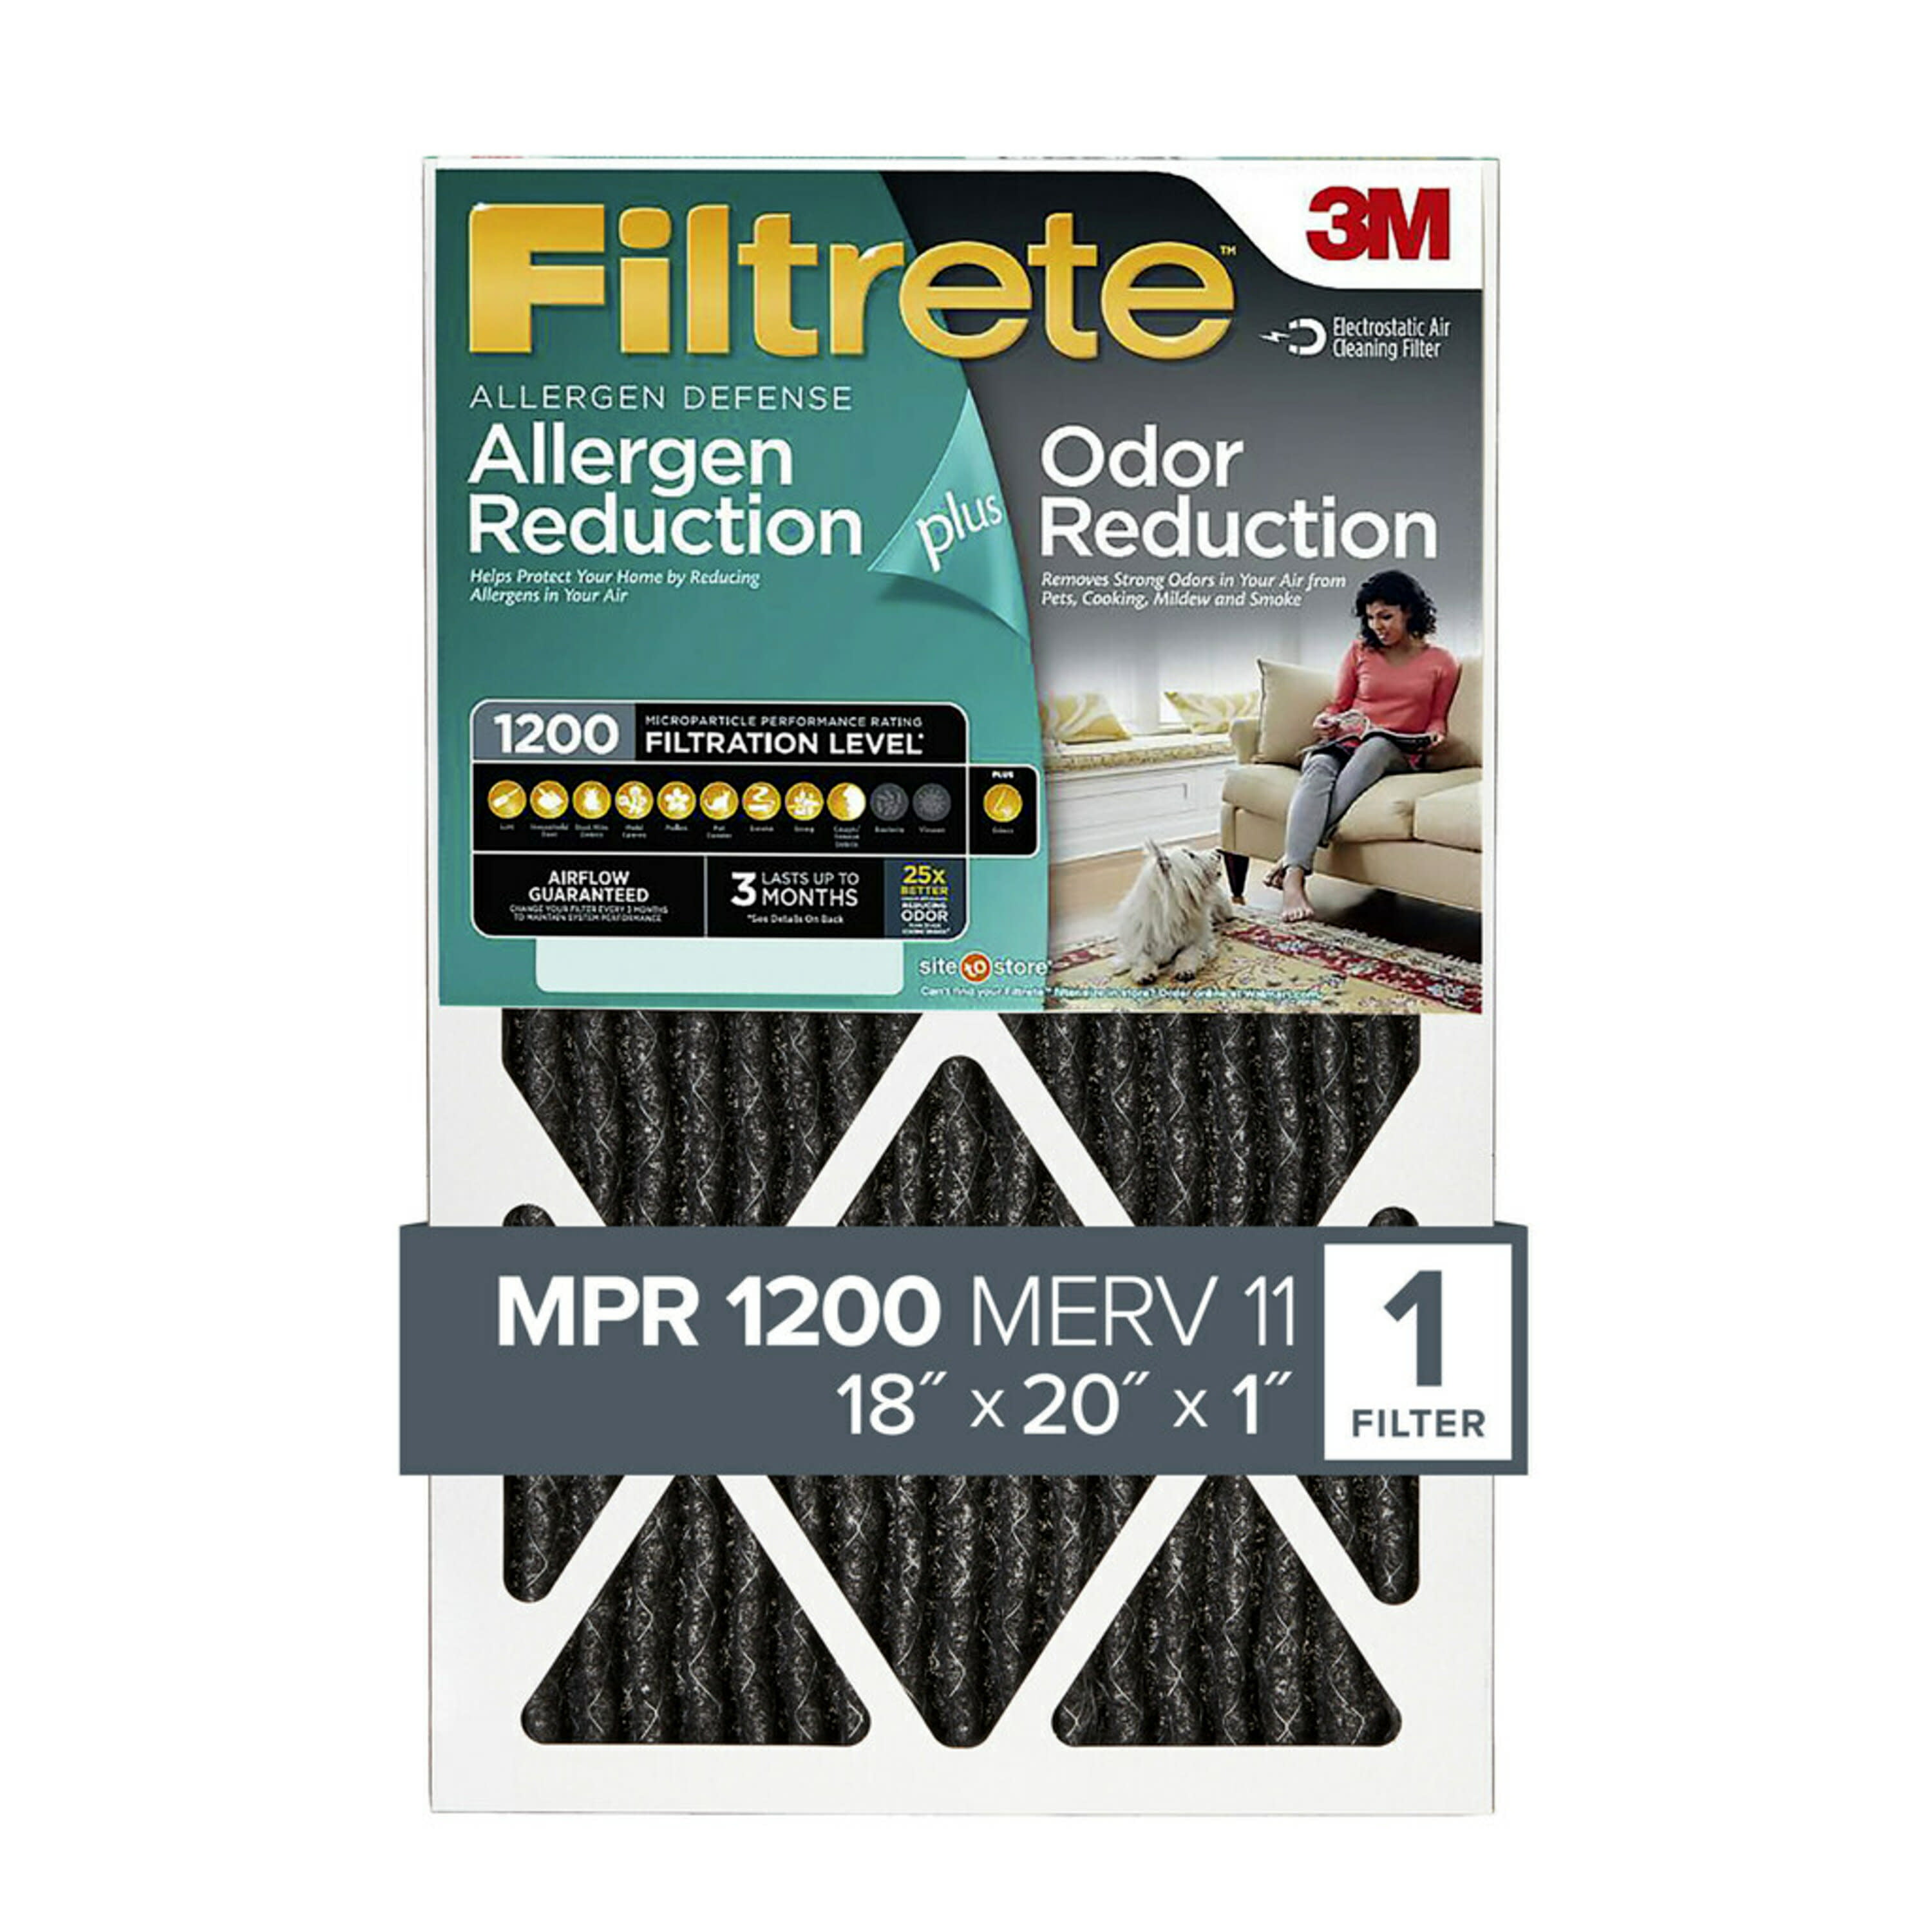 filtrete-18x20x1-allergen-plus-odor-reduction-hvac-furnace-air-filter